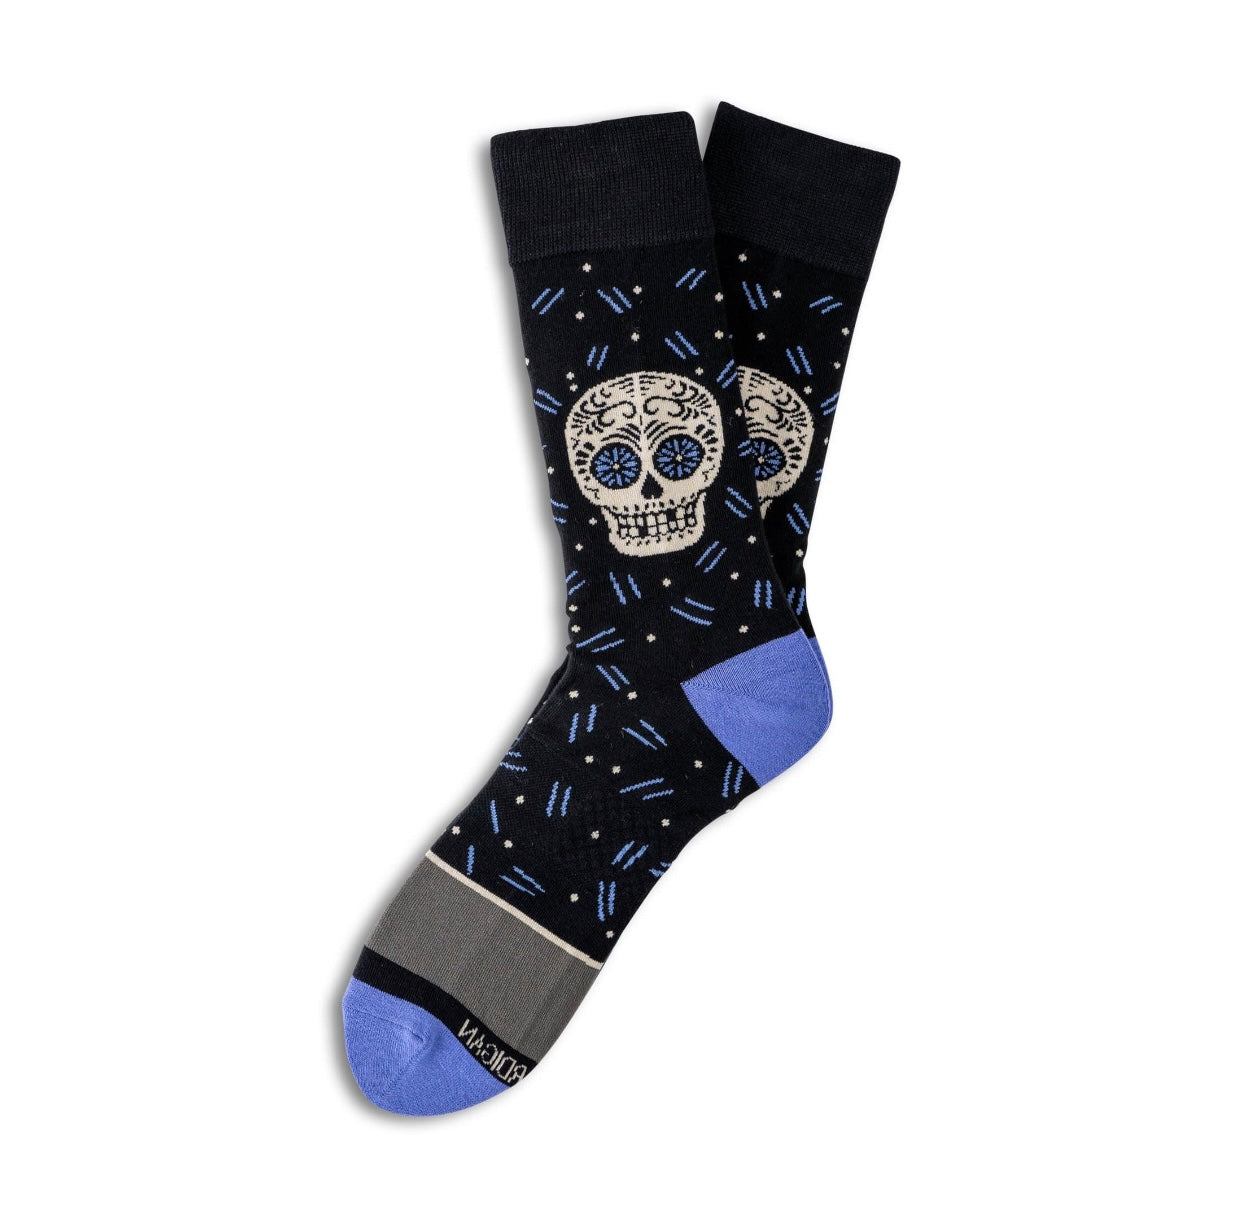 Men's mid calf sugar skulls socks with black, blue, and gray accents.